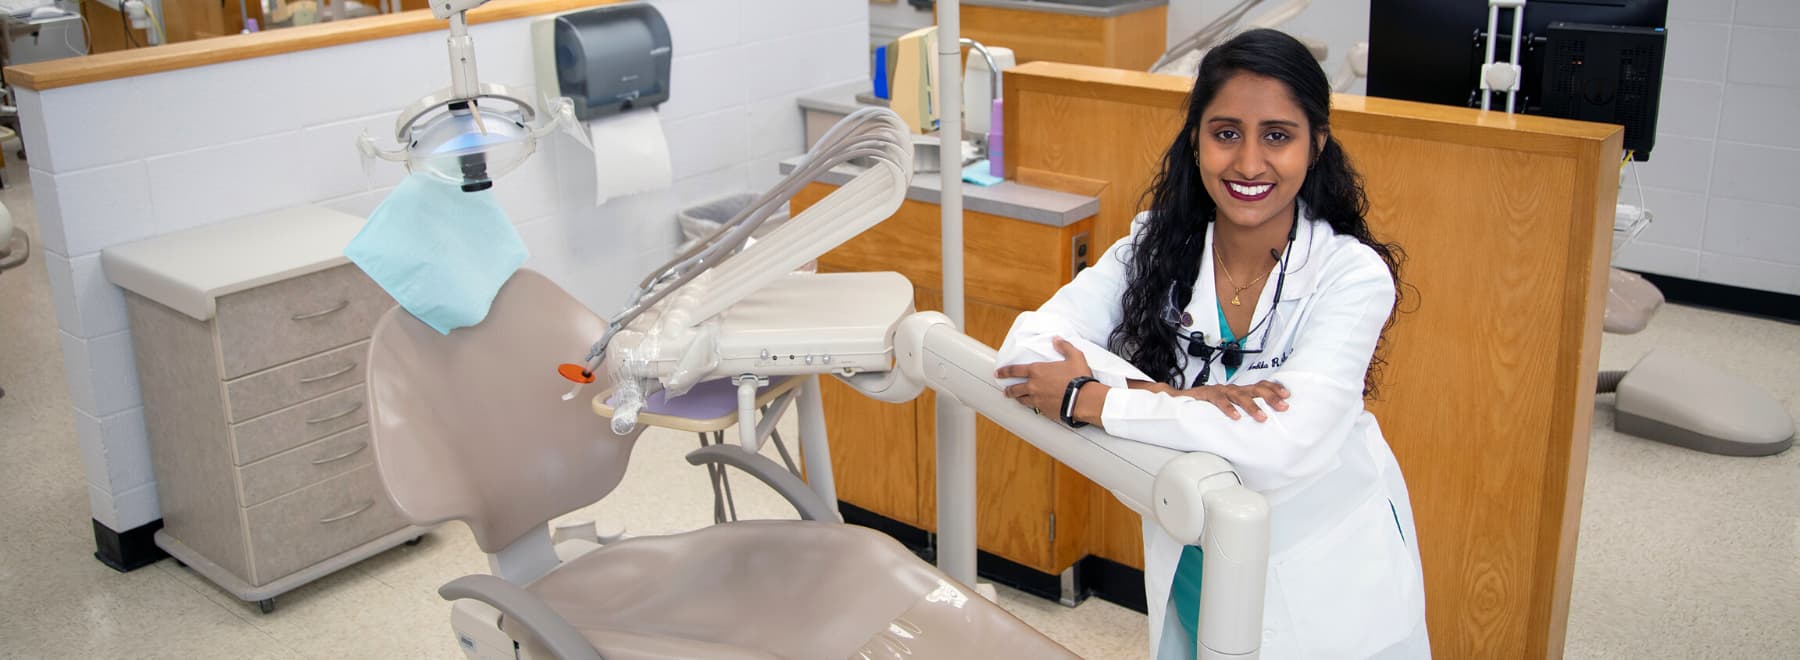 Smiling dentist in front of dental equipment